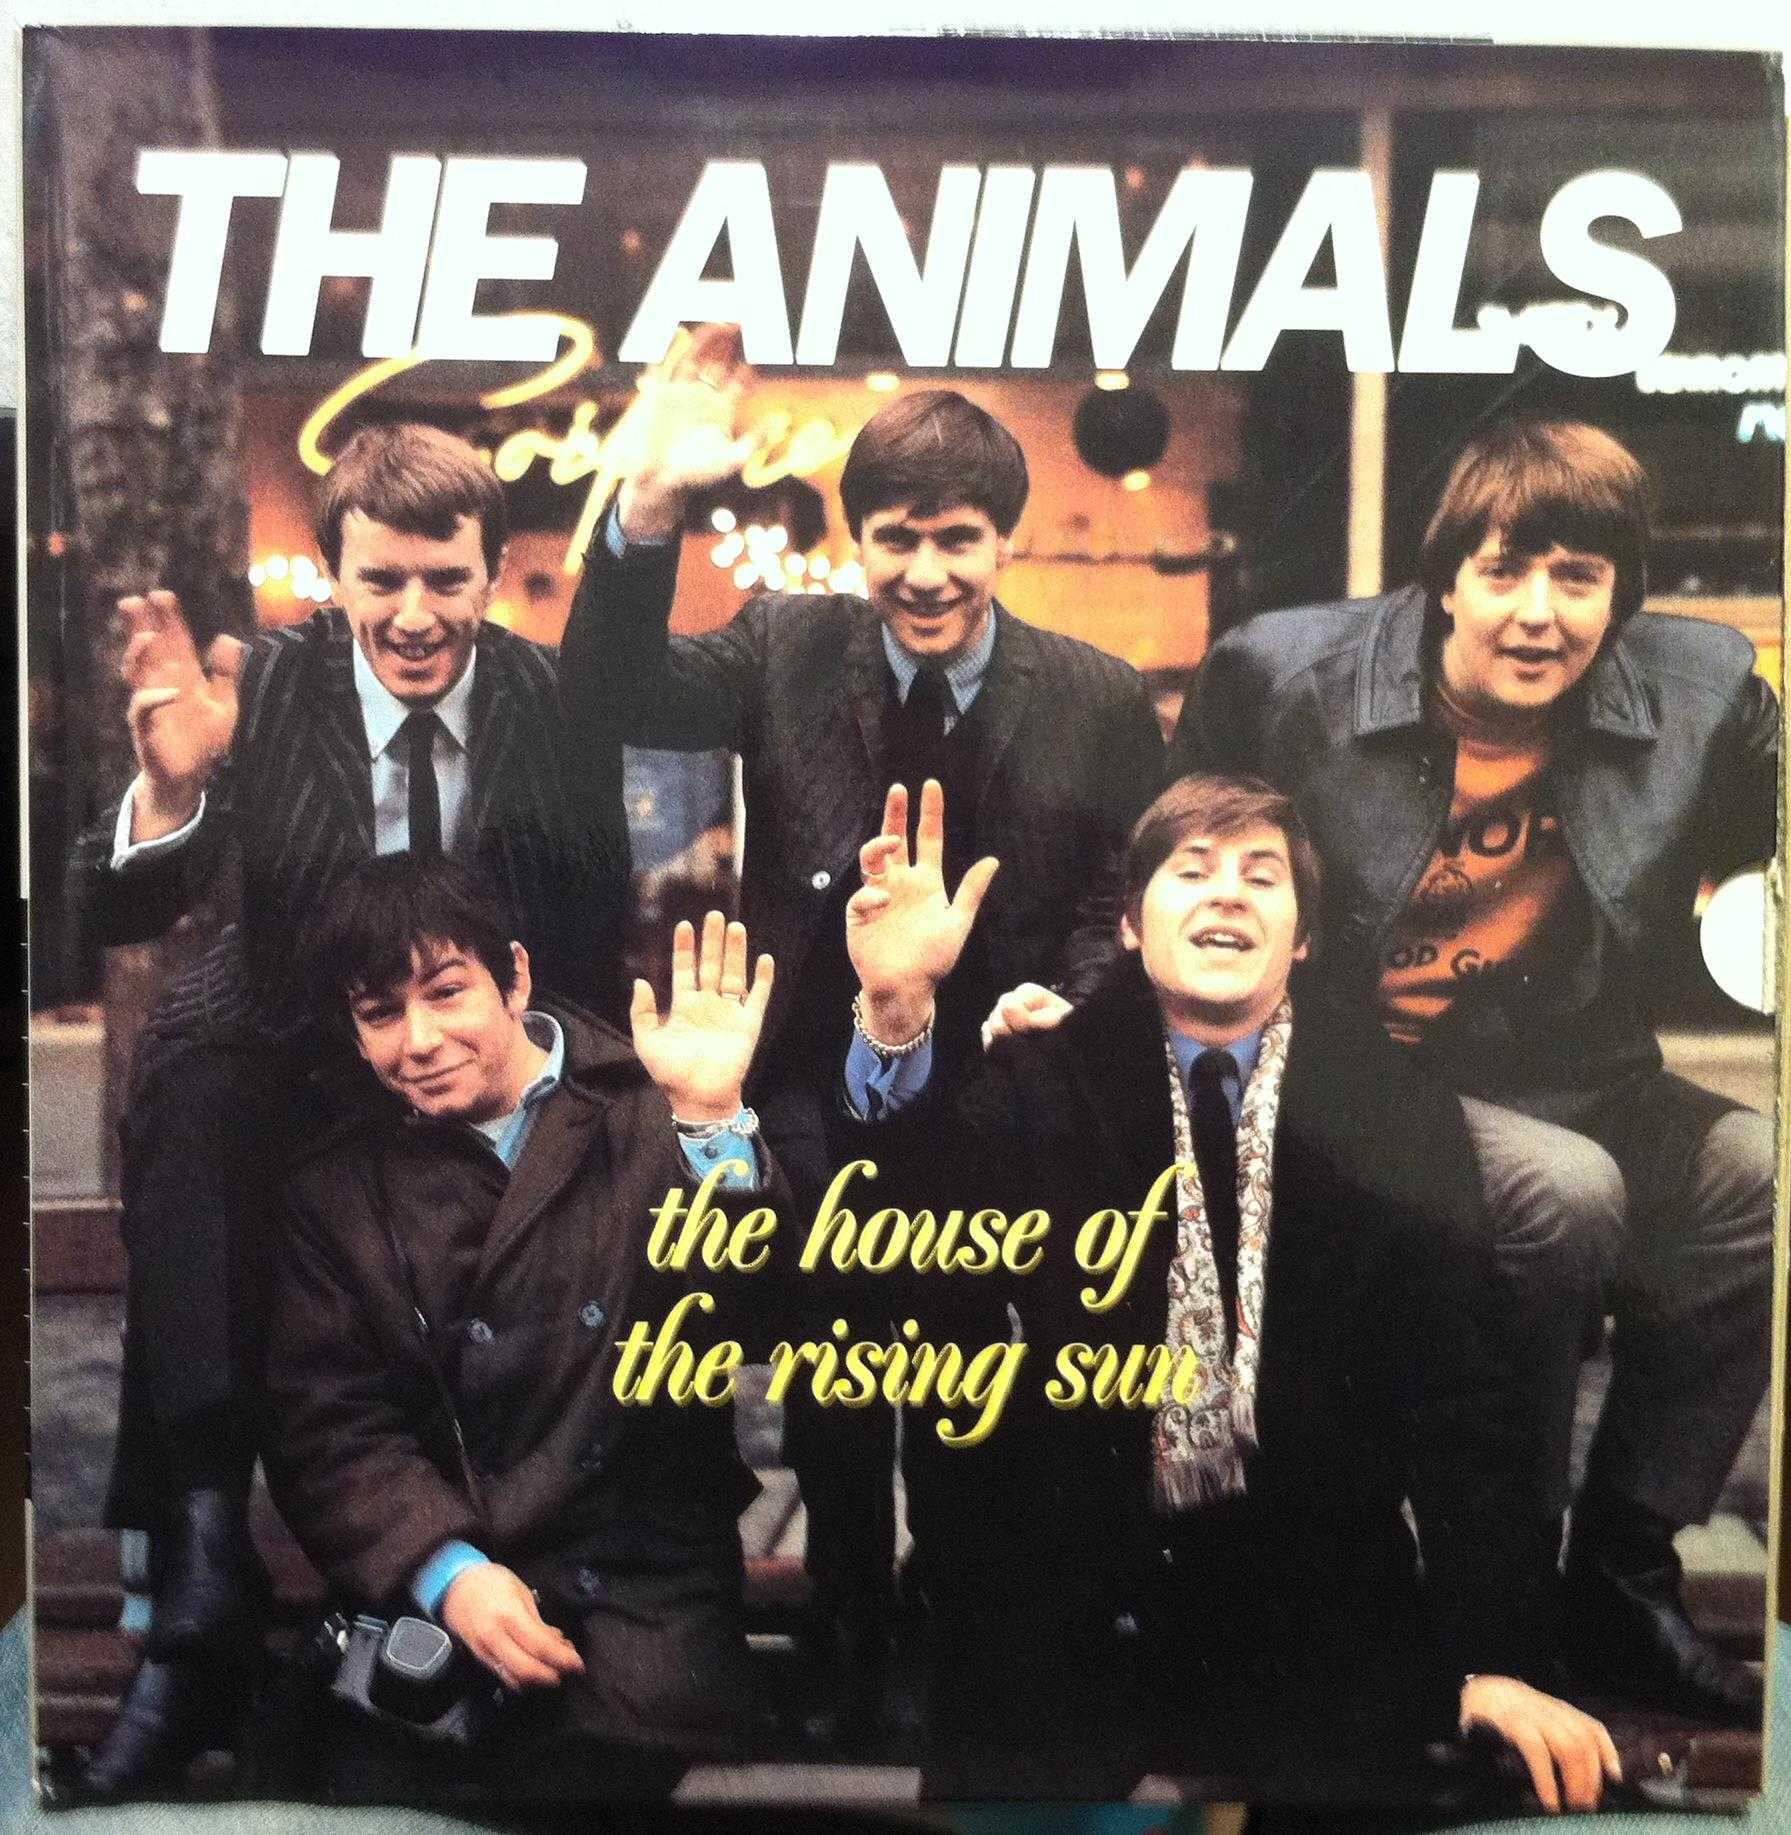 Зе энималс. The animals House of the Rising Sun обложка. Animals the House of the Rising Sun альбом. Группа the animals. Энималс дом восходящего 1964.